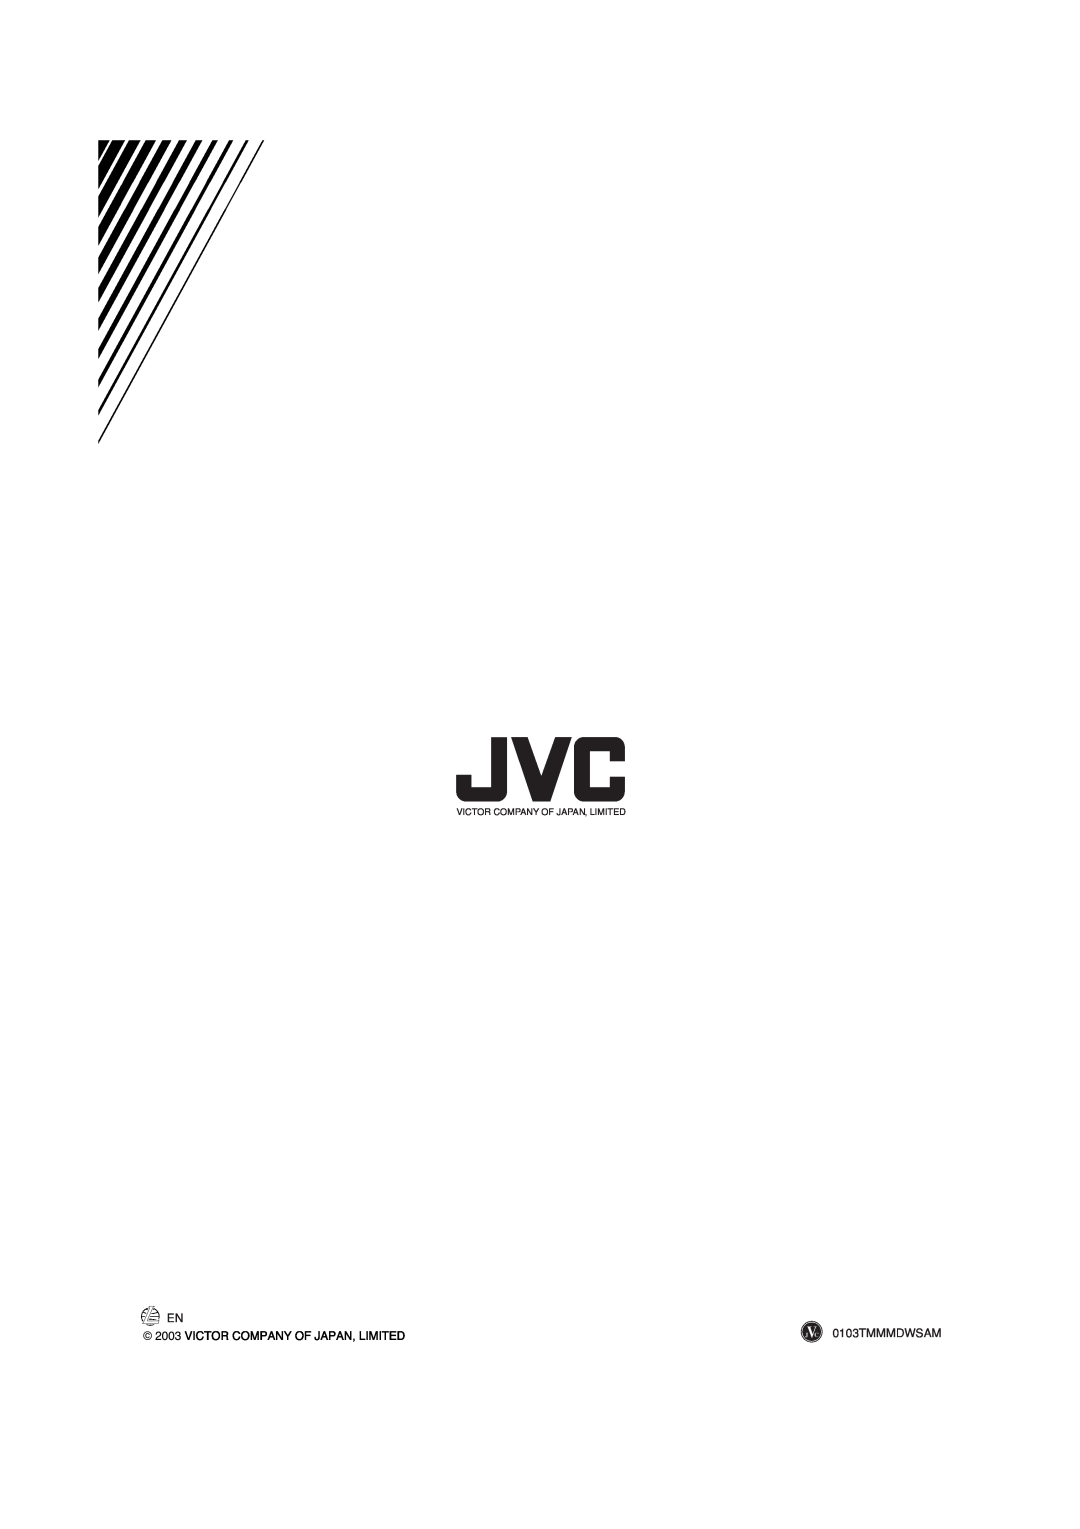 JVC MX-GT88 manual EN JVC 0103TMMMDWSAM, Victor Company Of Japan, Limited 